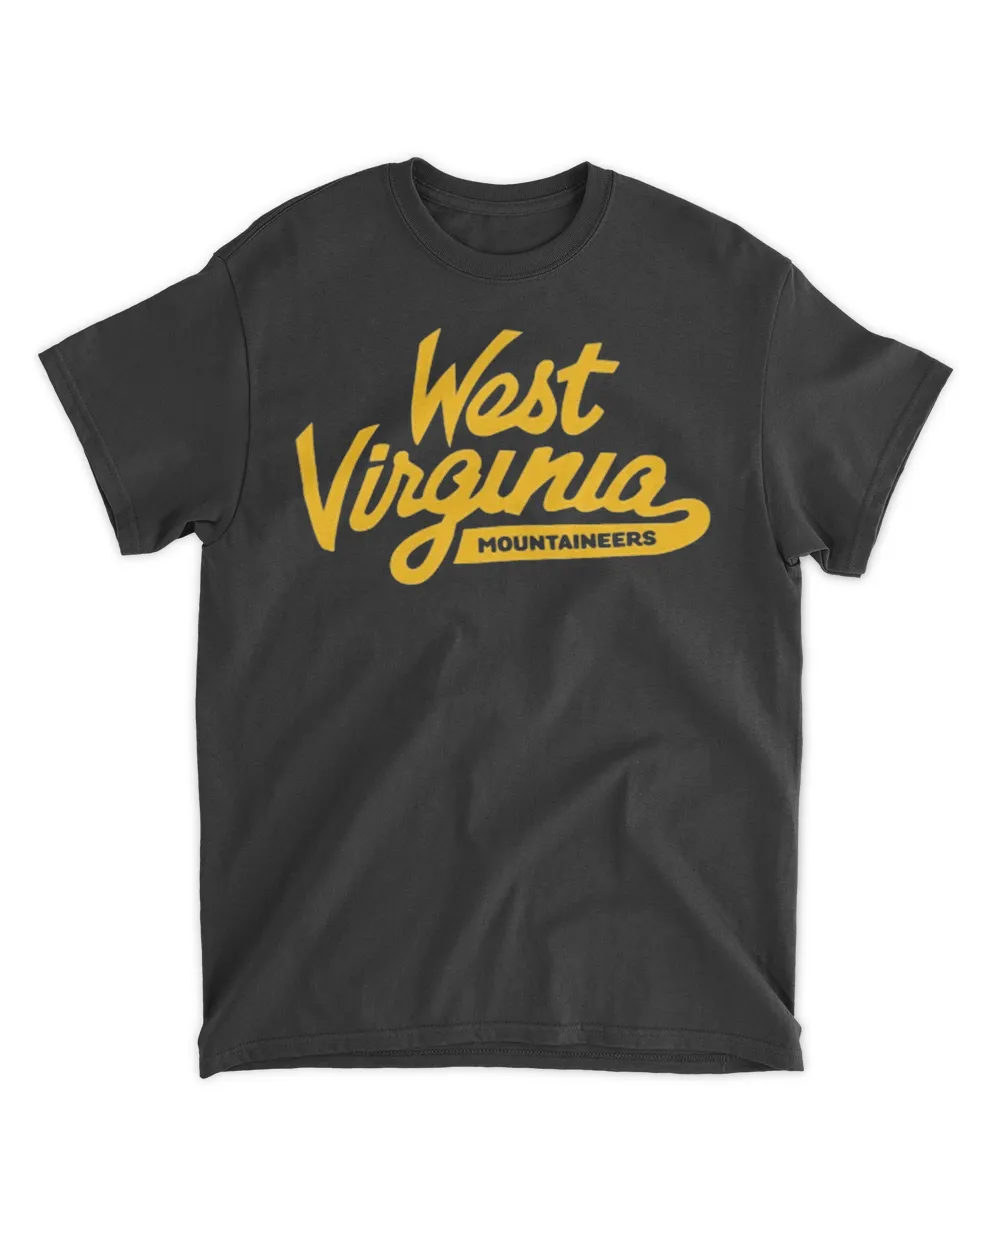 West Virginia Mountaineers Retro Script shirt